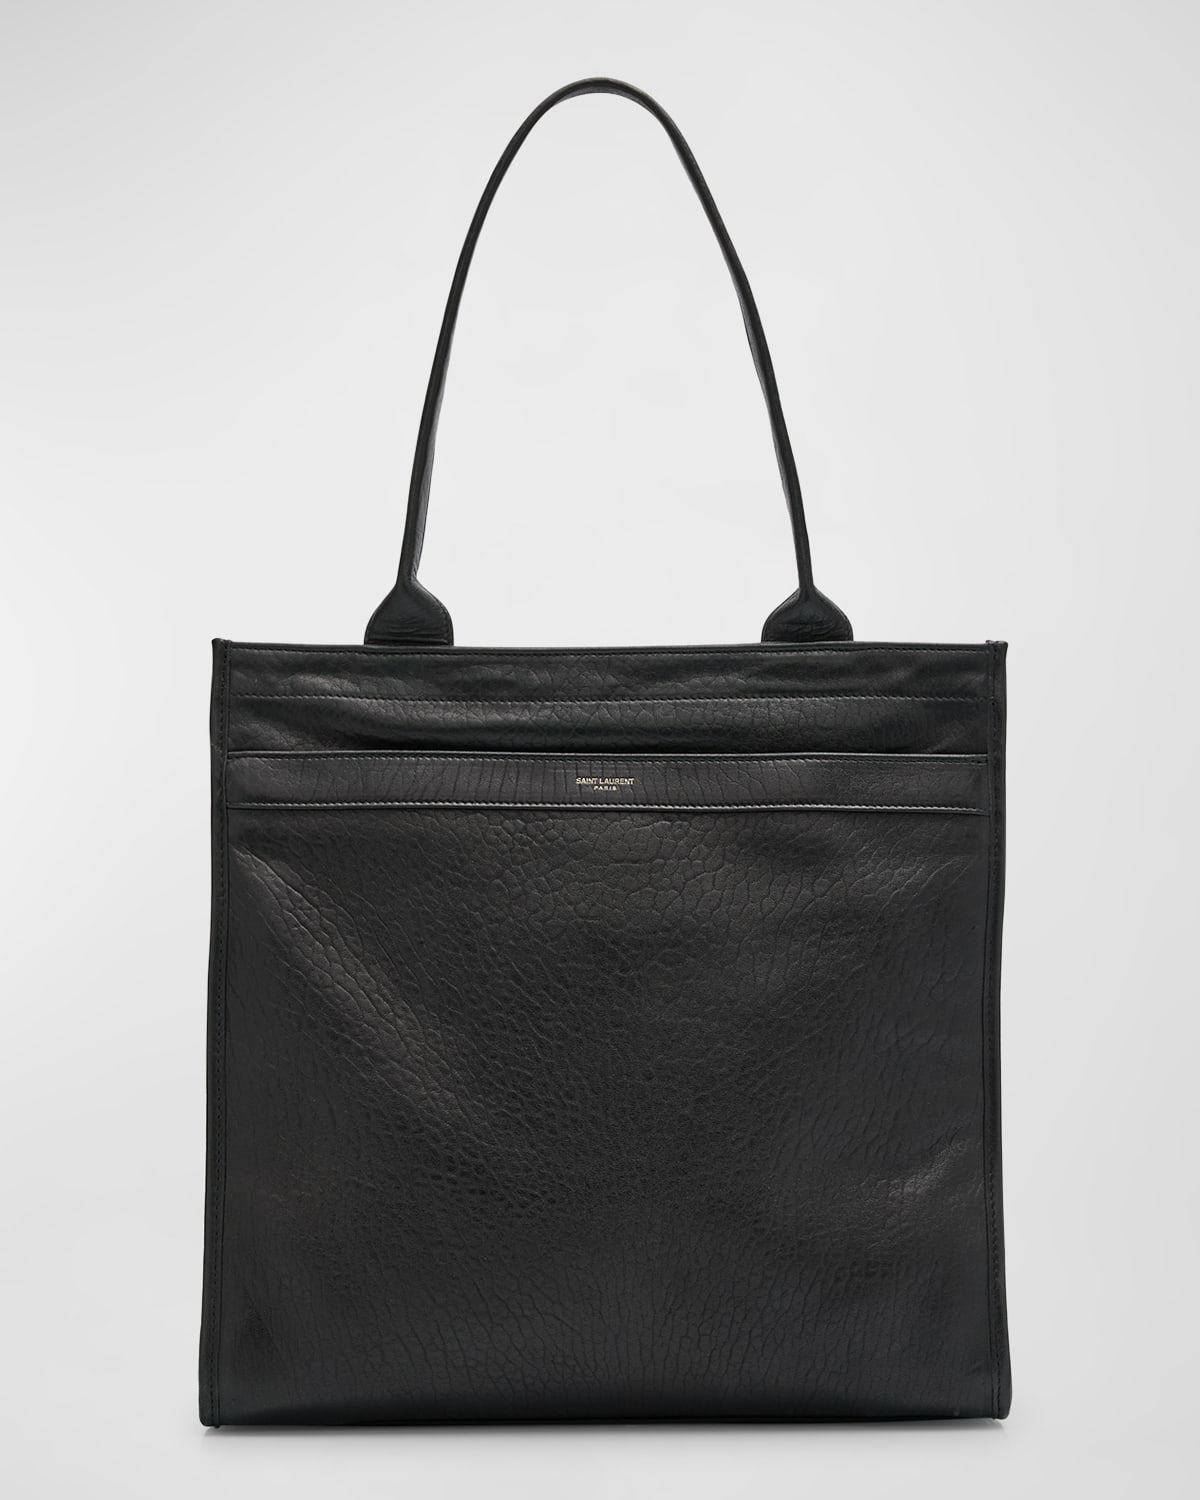 Saint Laurent Men's Tote Bag In Leather In Nero